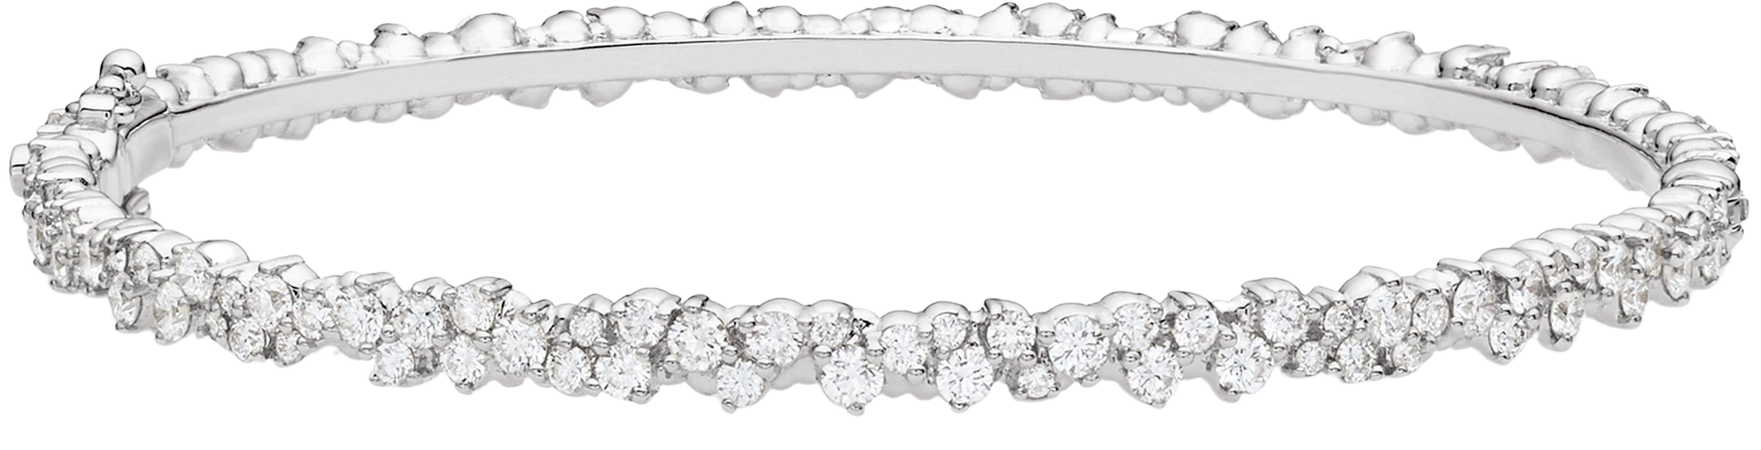 18k White Gold Confetti Bangle Bracelet By Paul Morelli | Moda Operandi